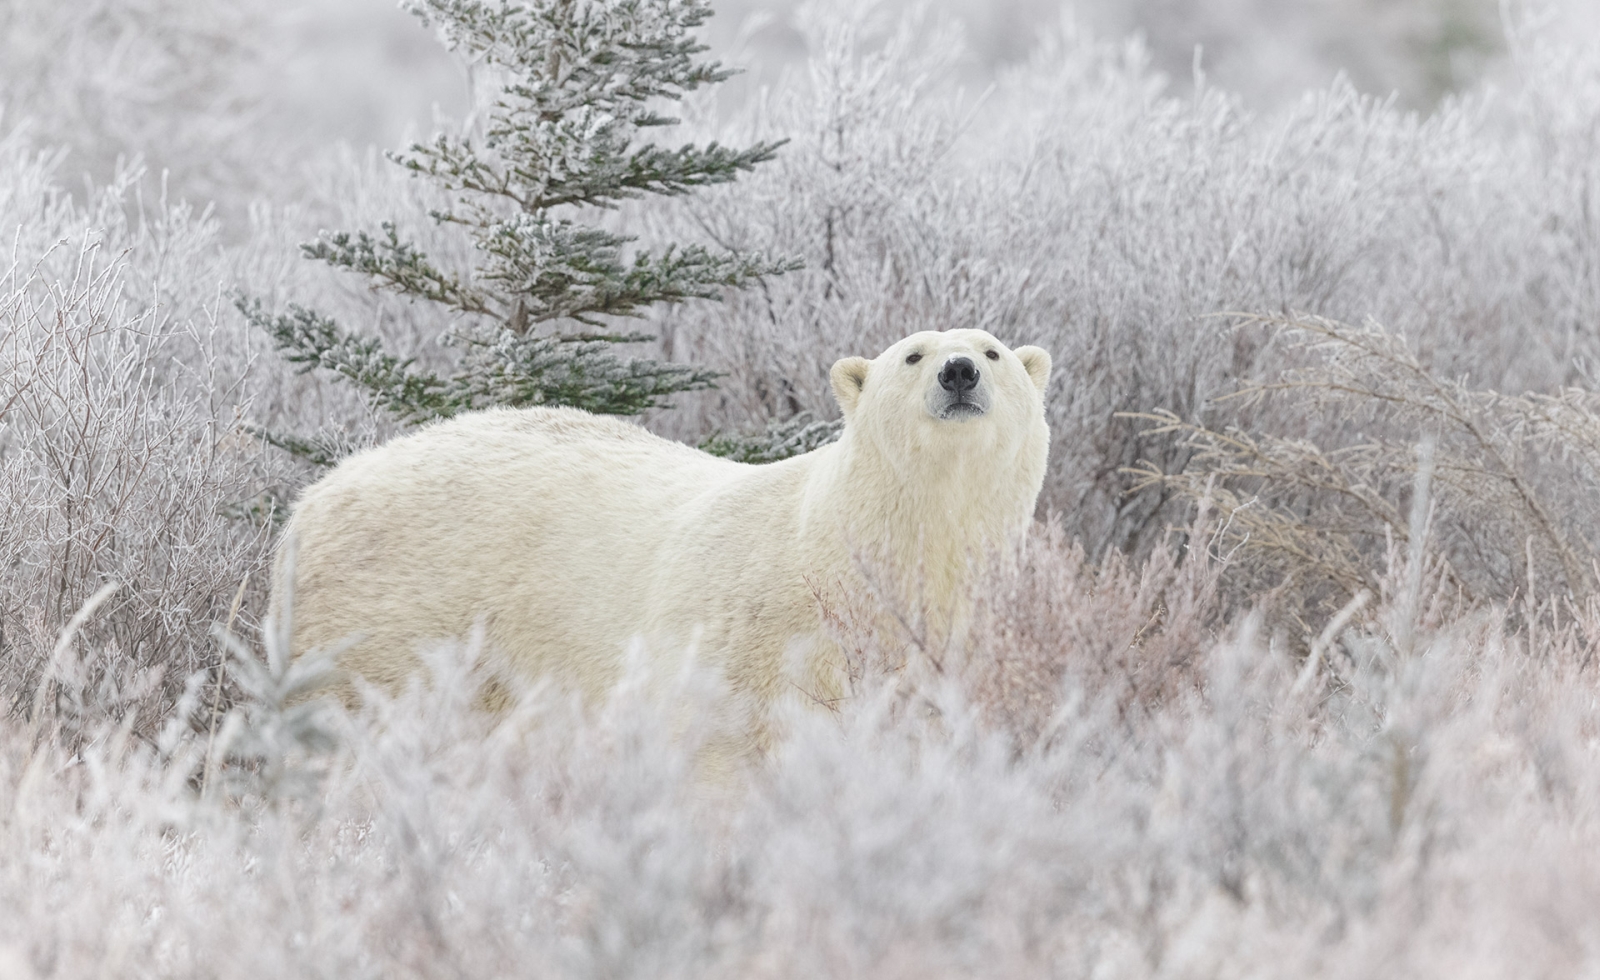 Polar bear looking over frosty grass